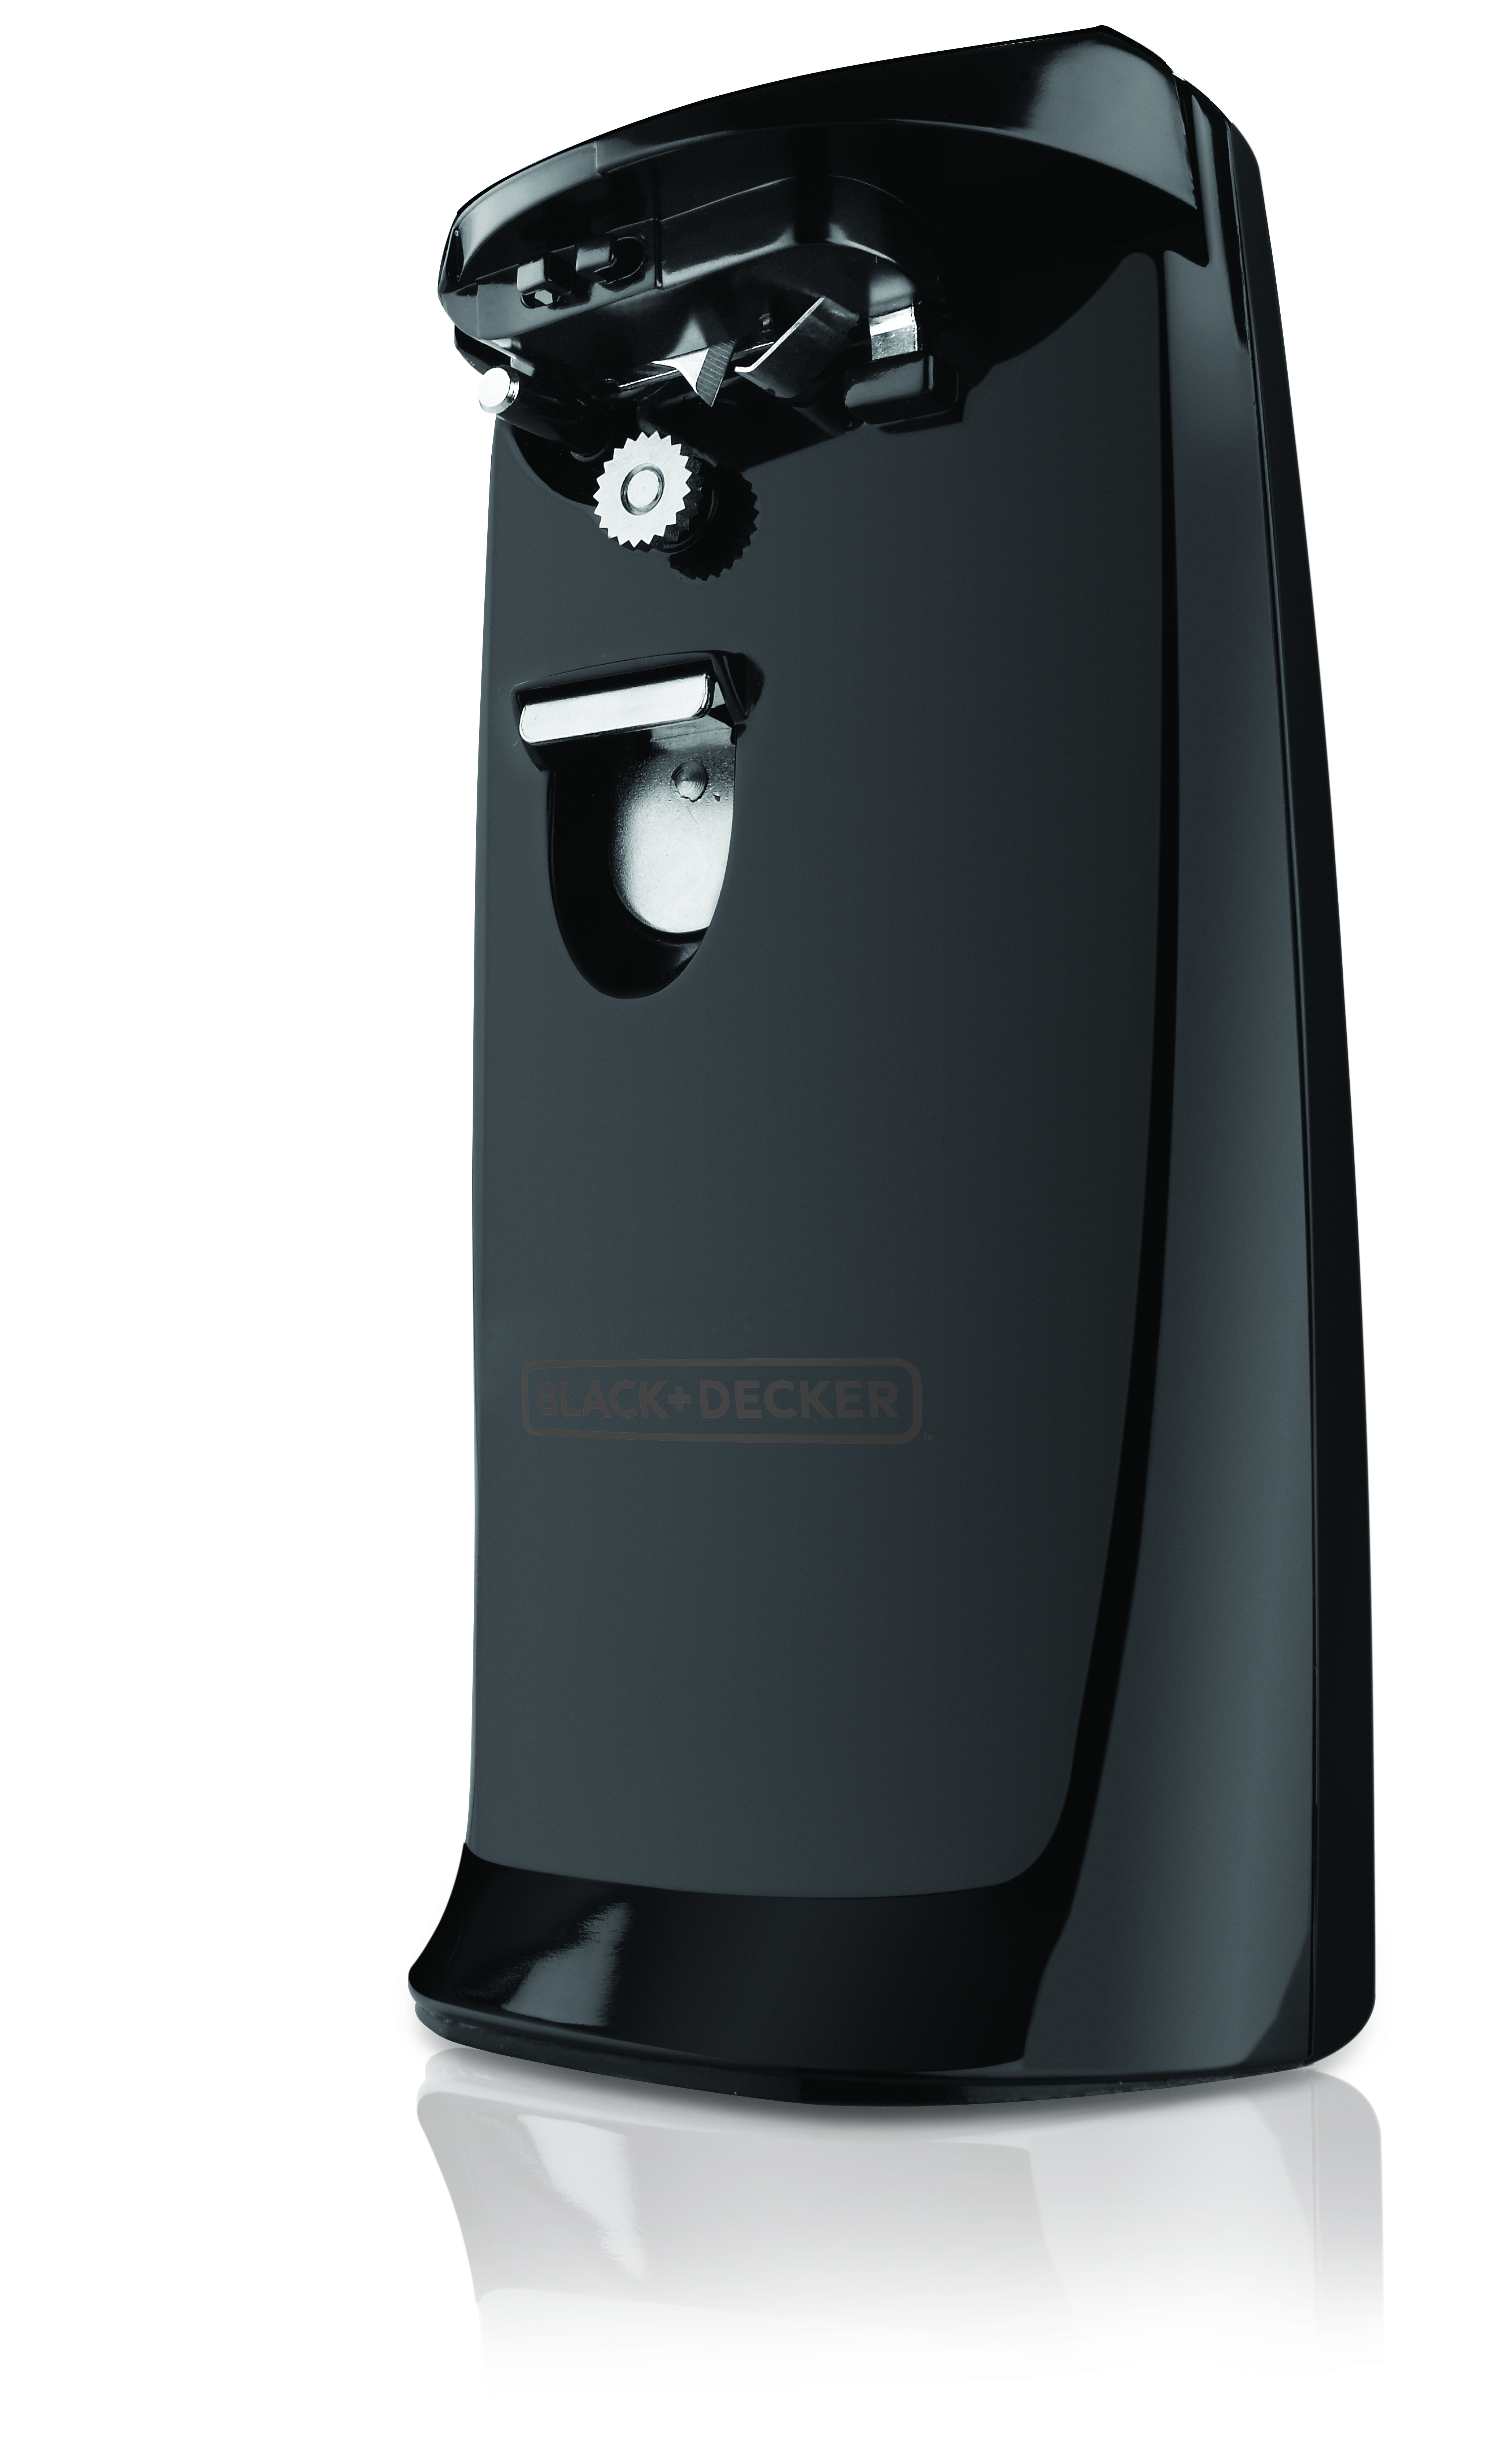 Black & Decker EC450 electric can opener